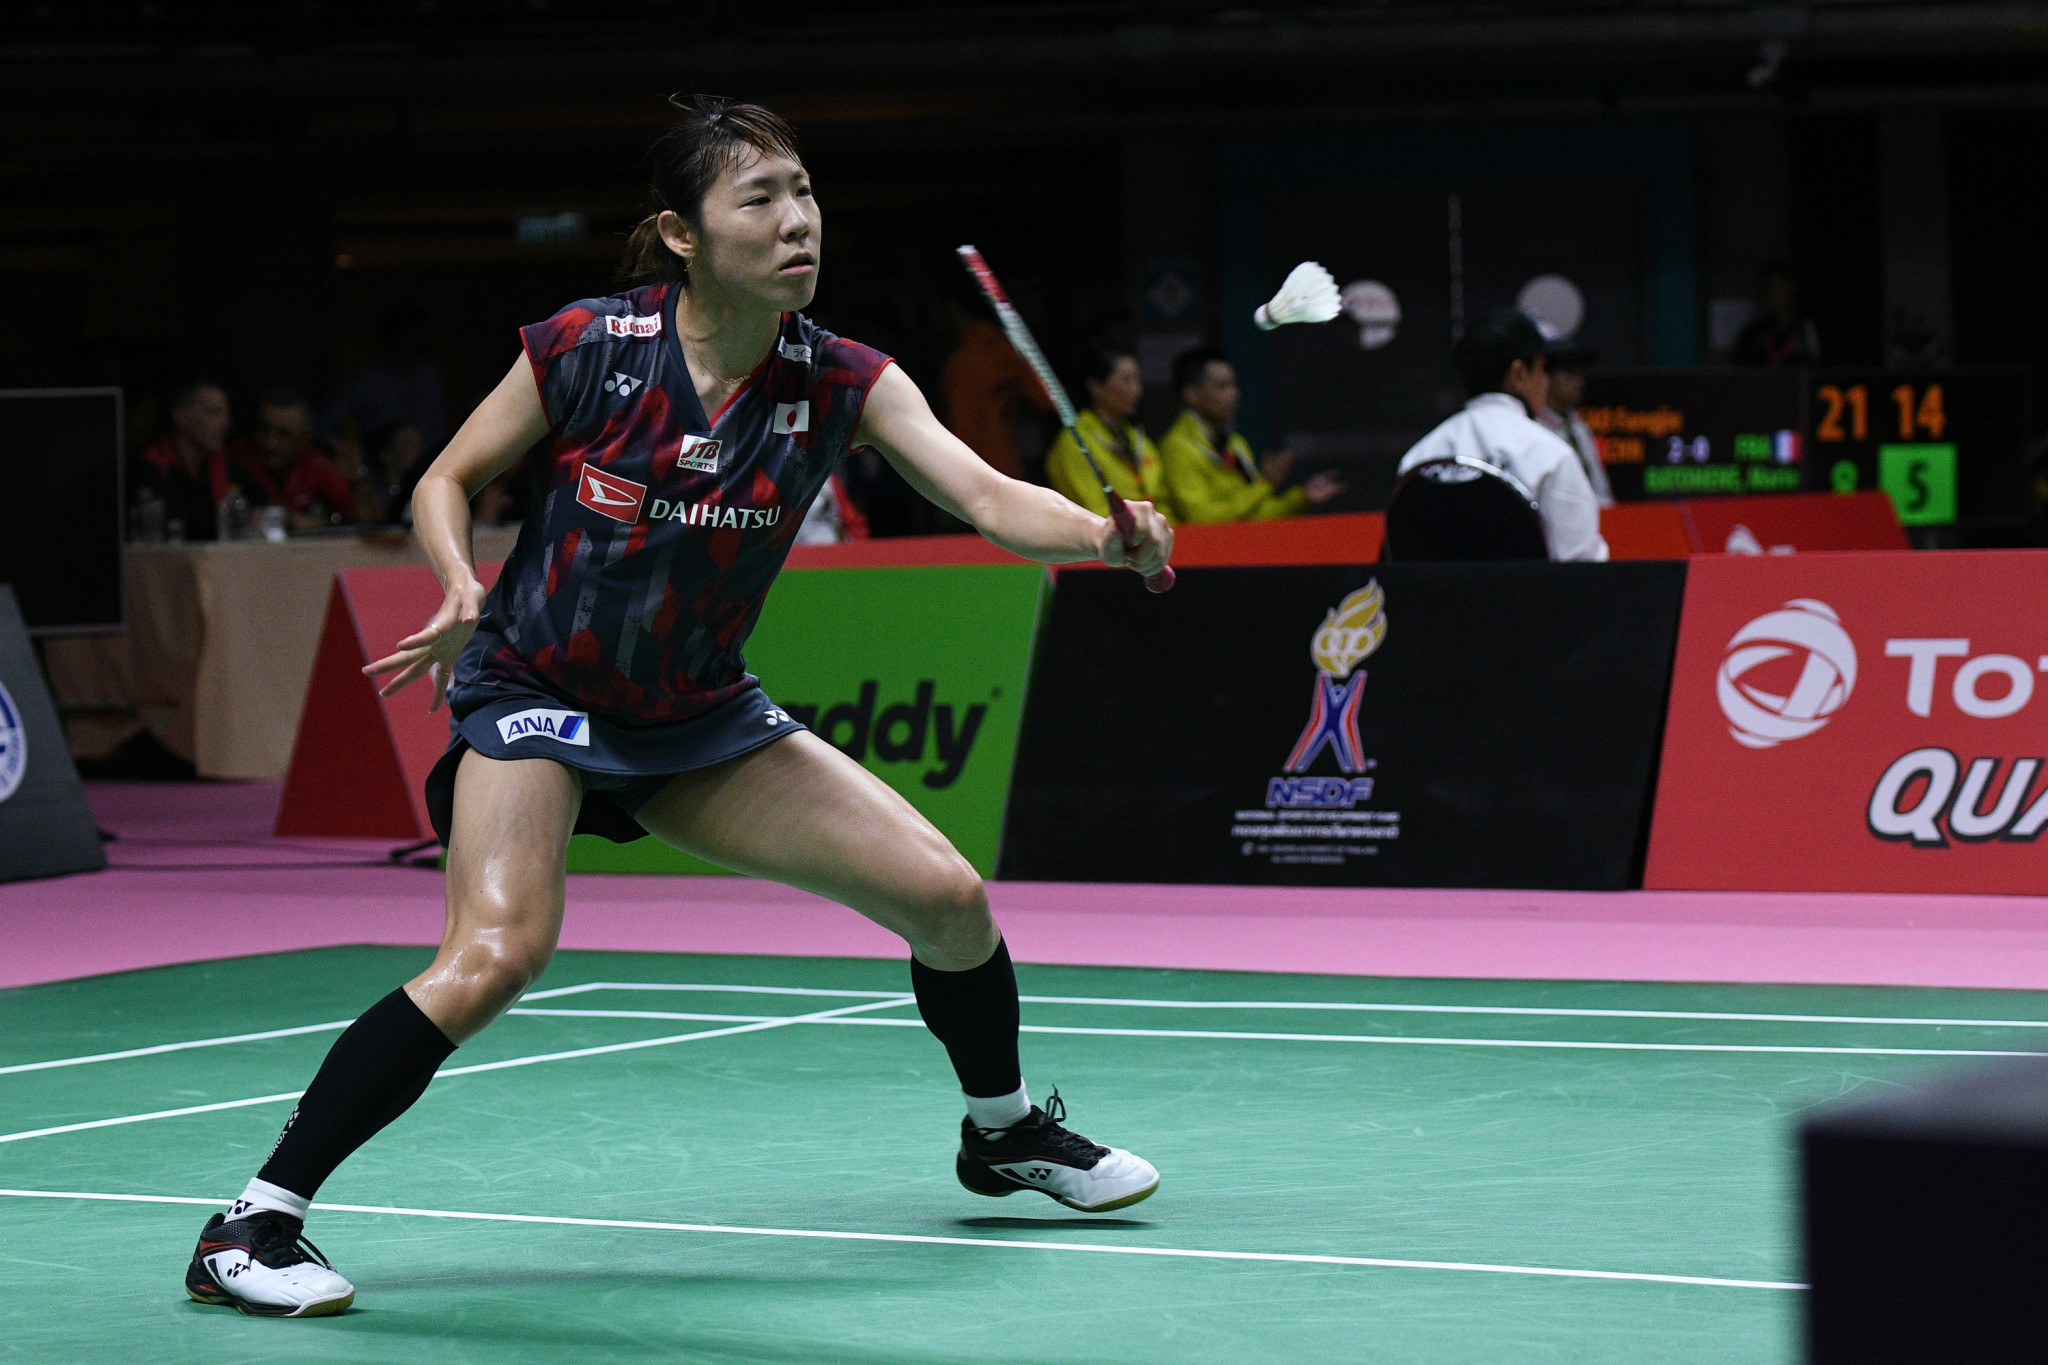 Sato suffers second round loss at U.S. Open Badminton Championships